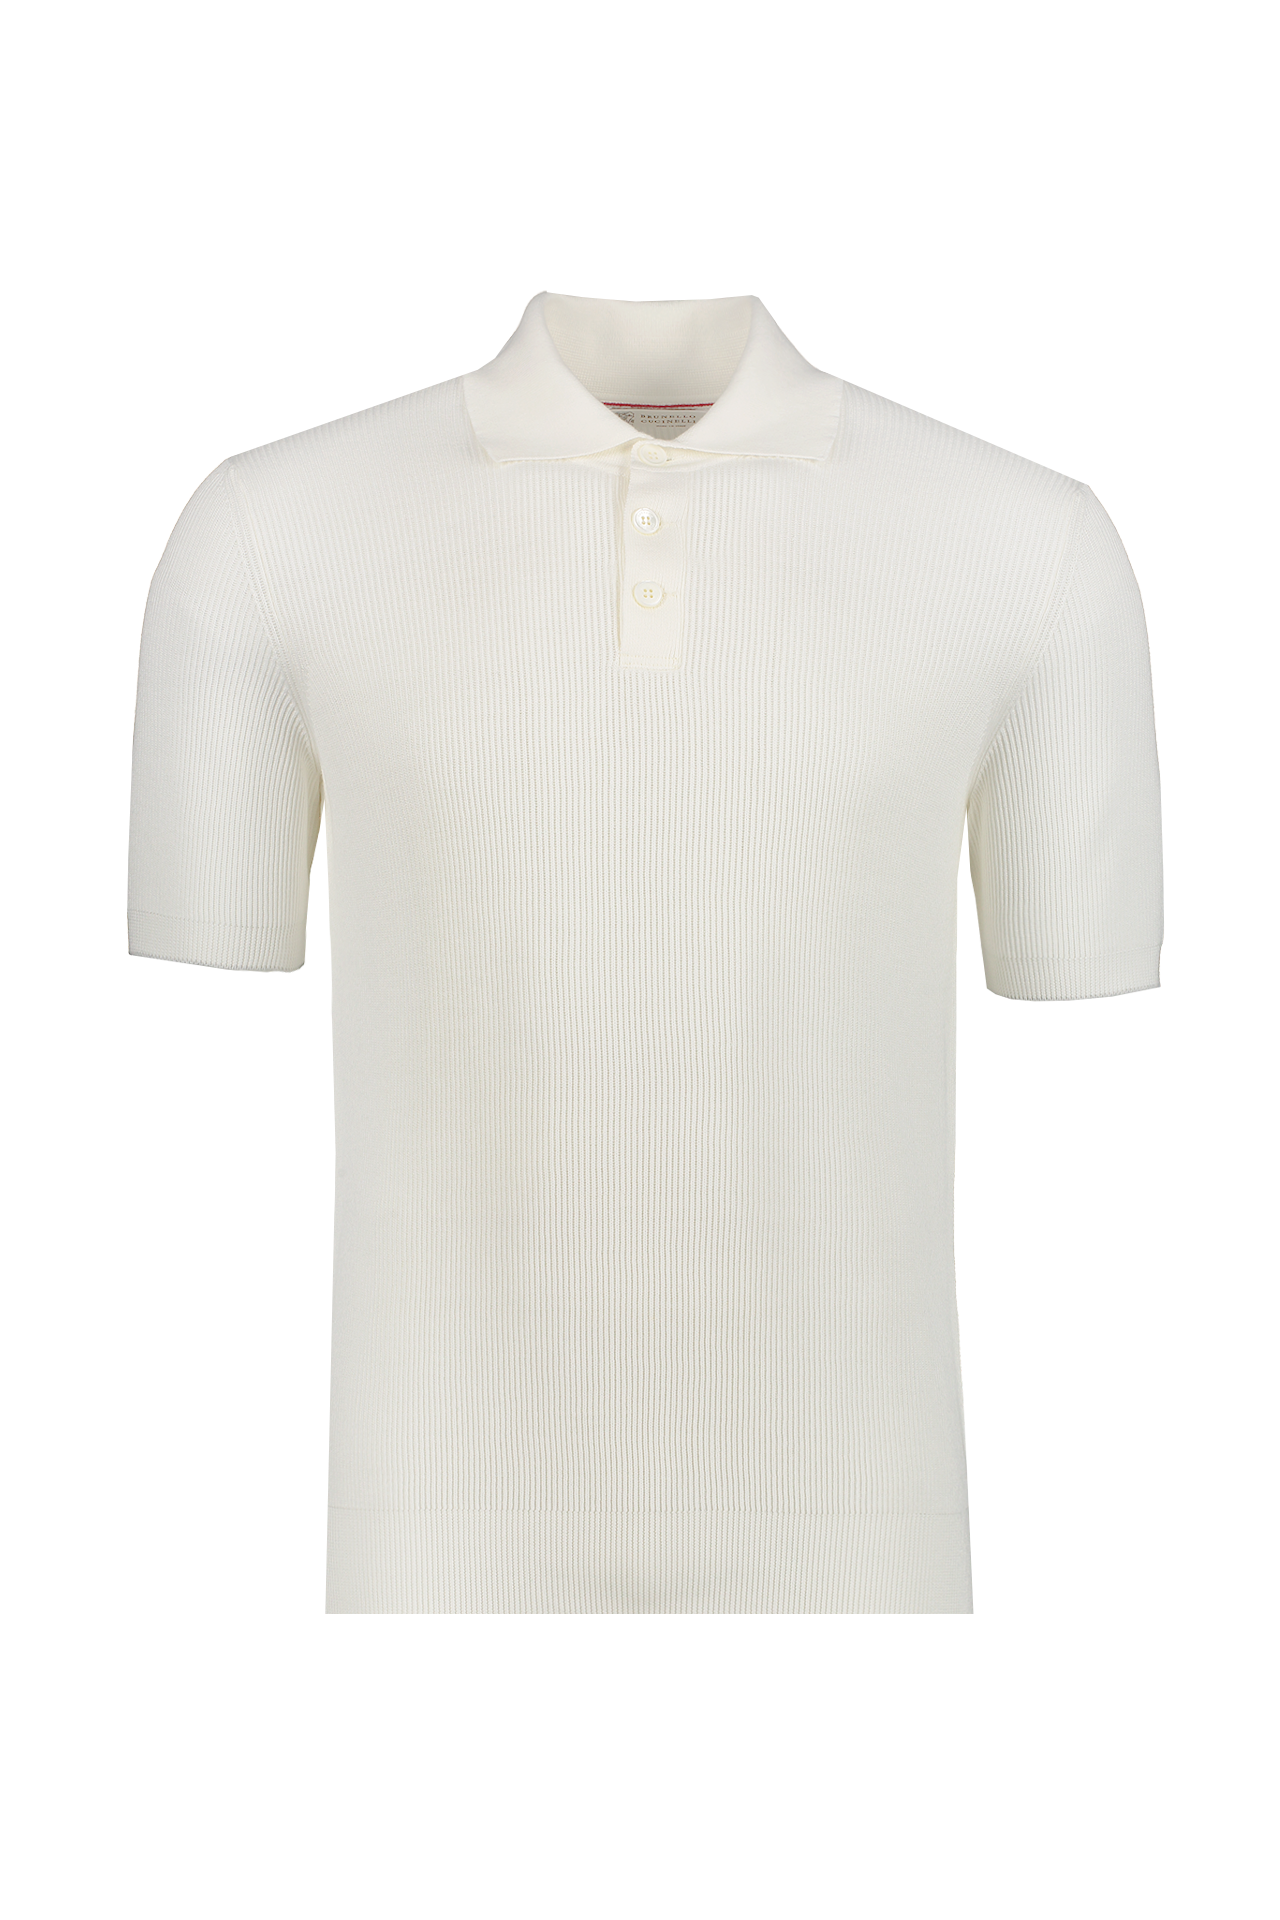 Brunello Cucinelli Men's 3 Button Polo Shirt | A.K. Rikk's